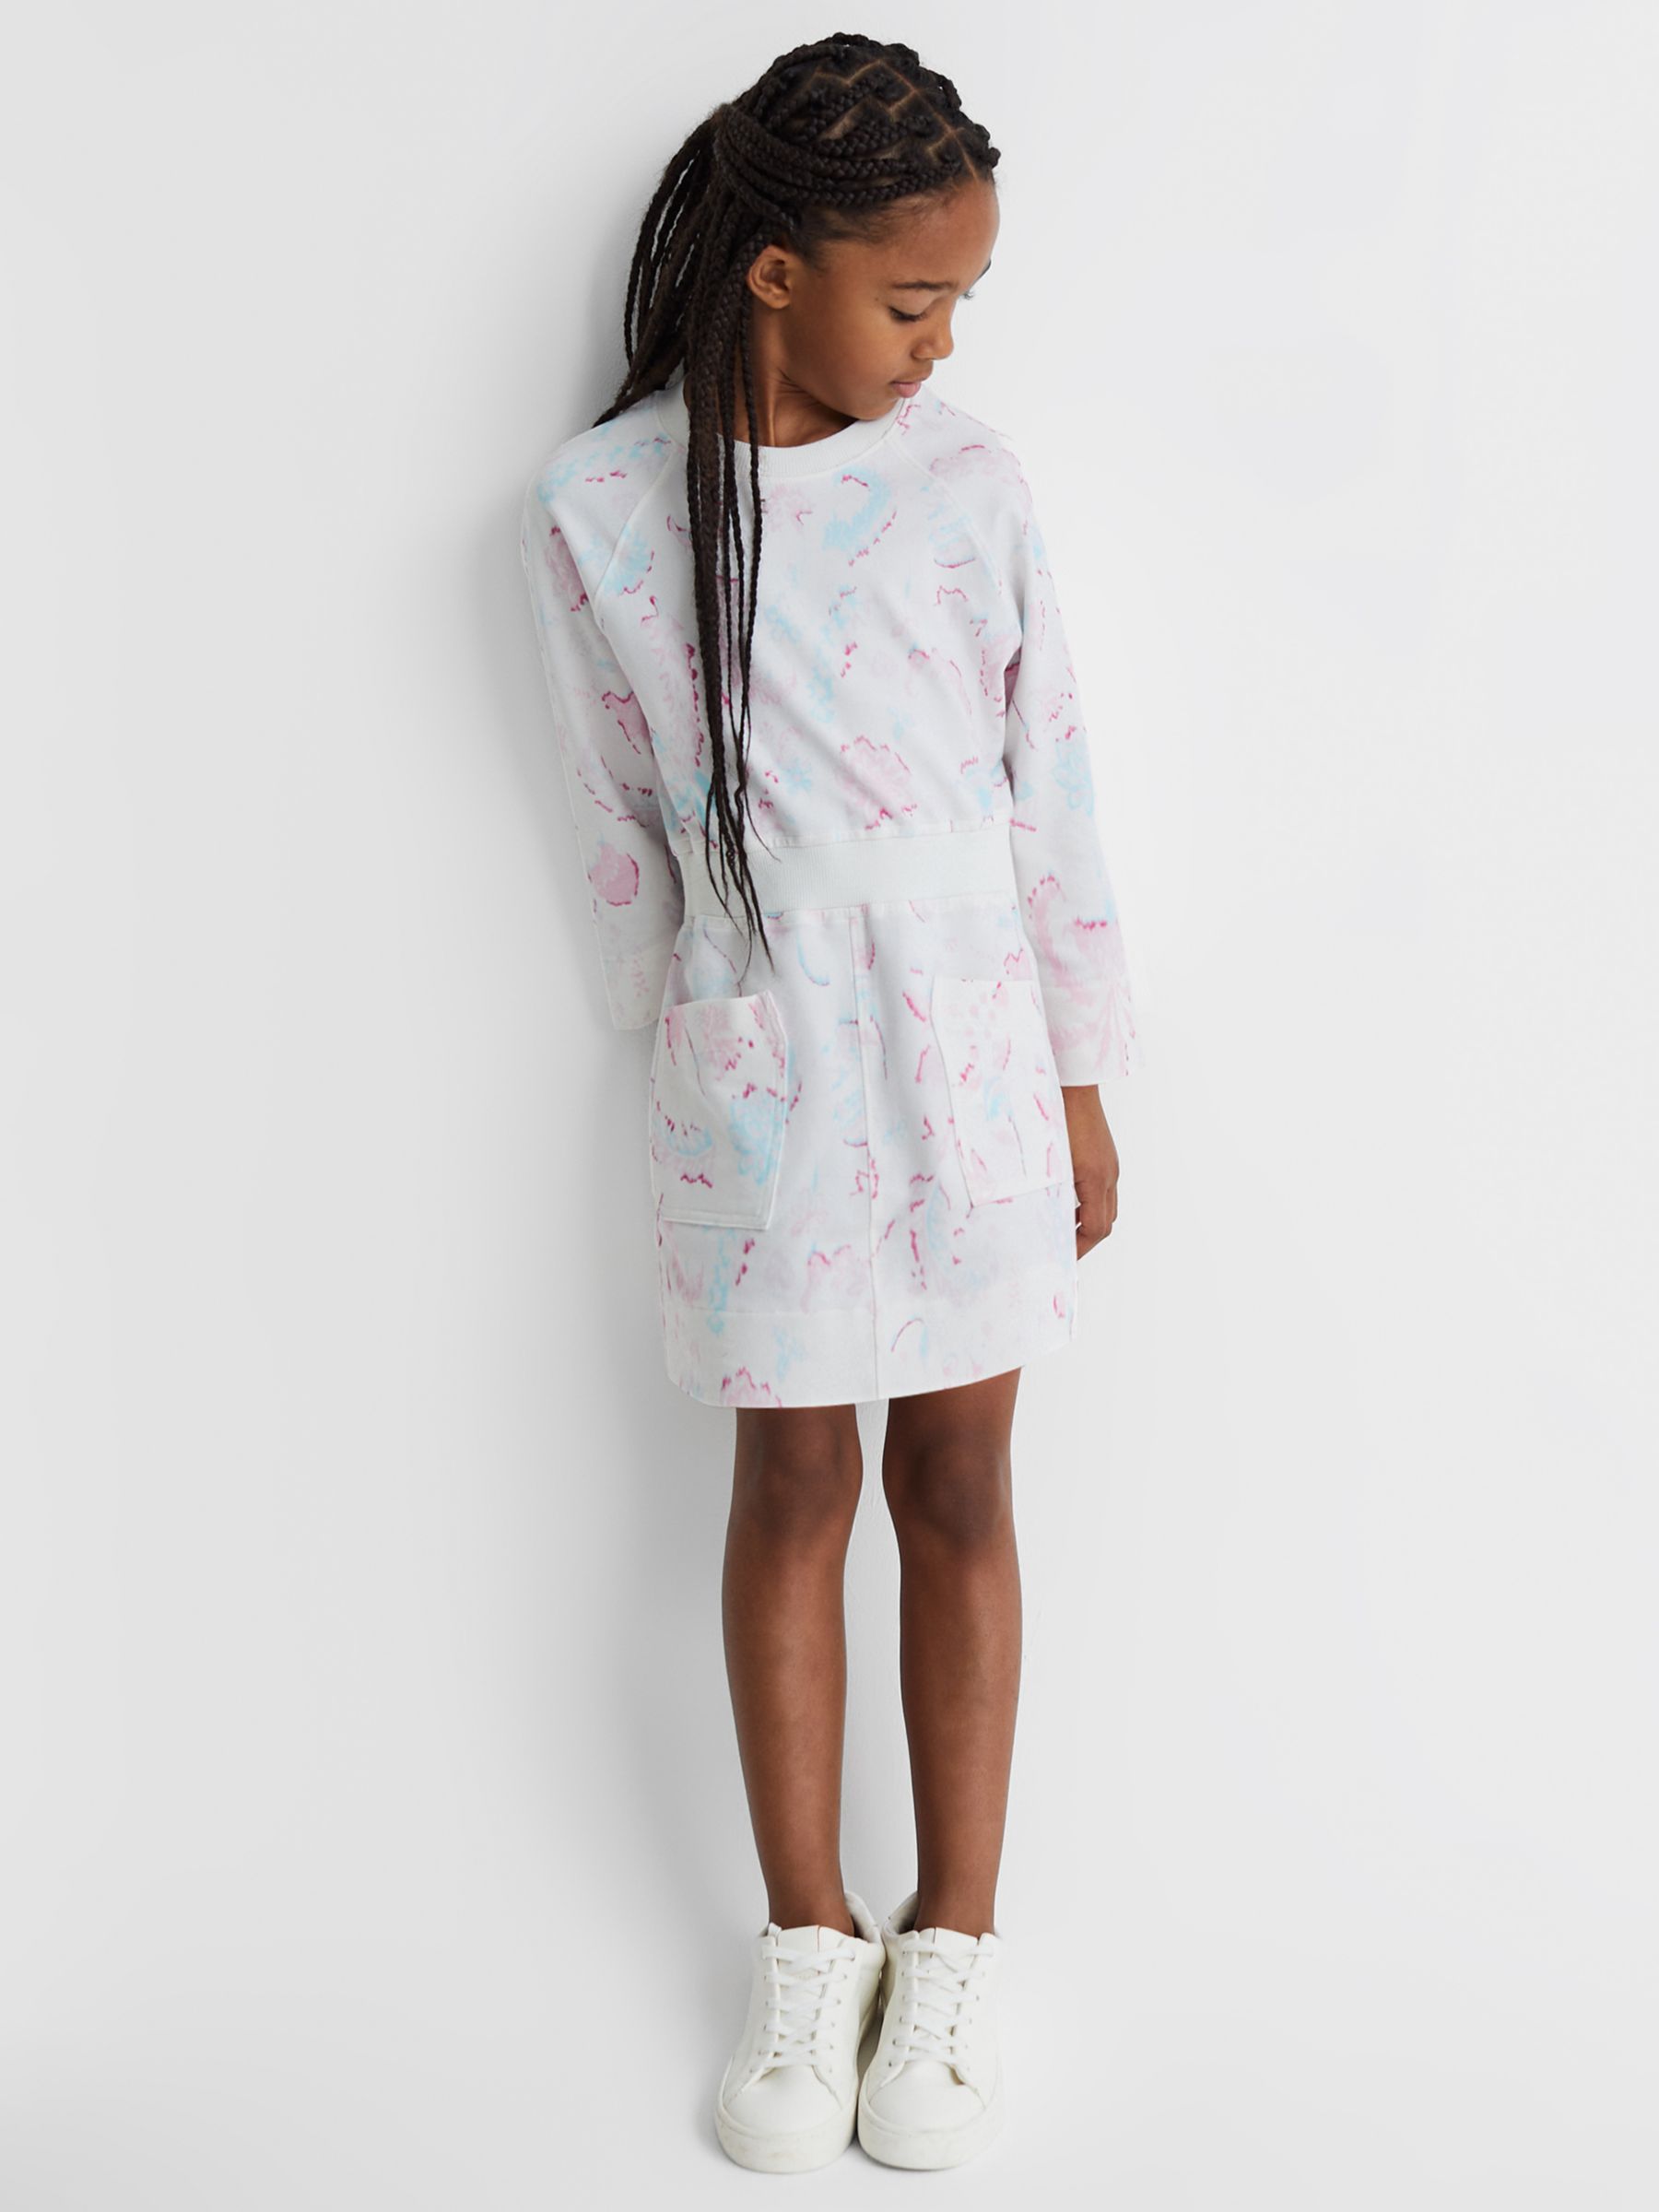 Reiss Kids' Janey Crew Neck Jersey Dress, Ivory/Multi, 9-10Y